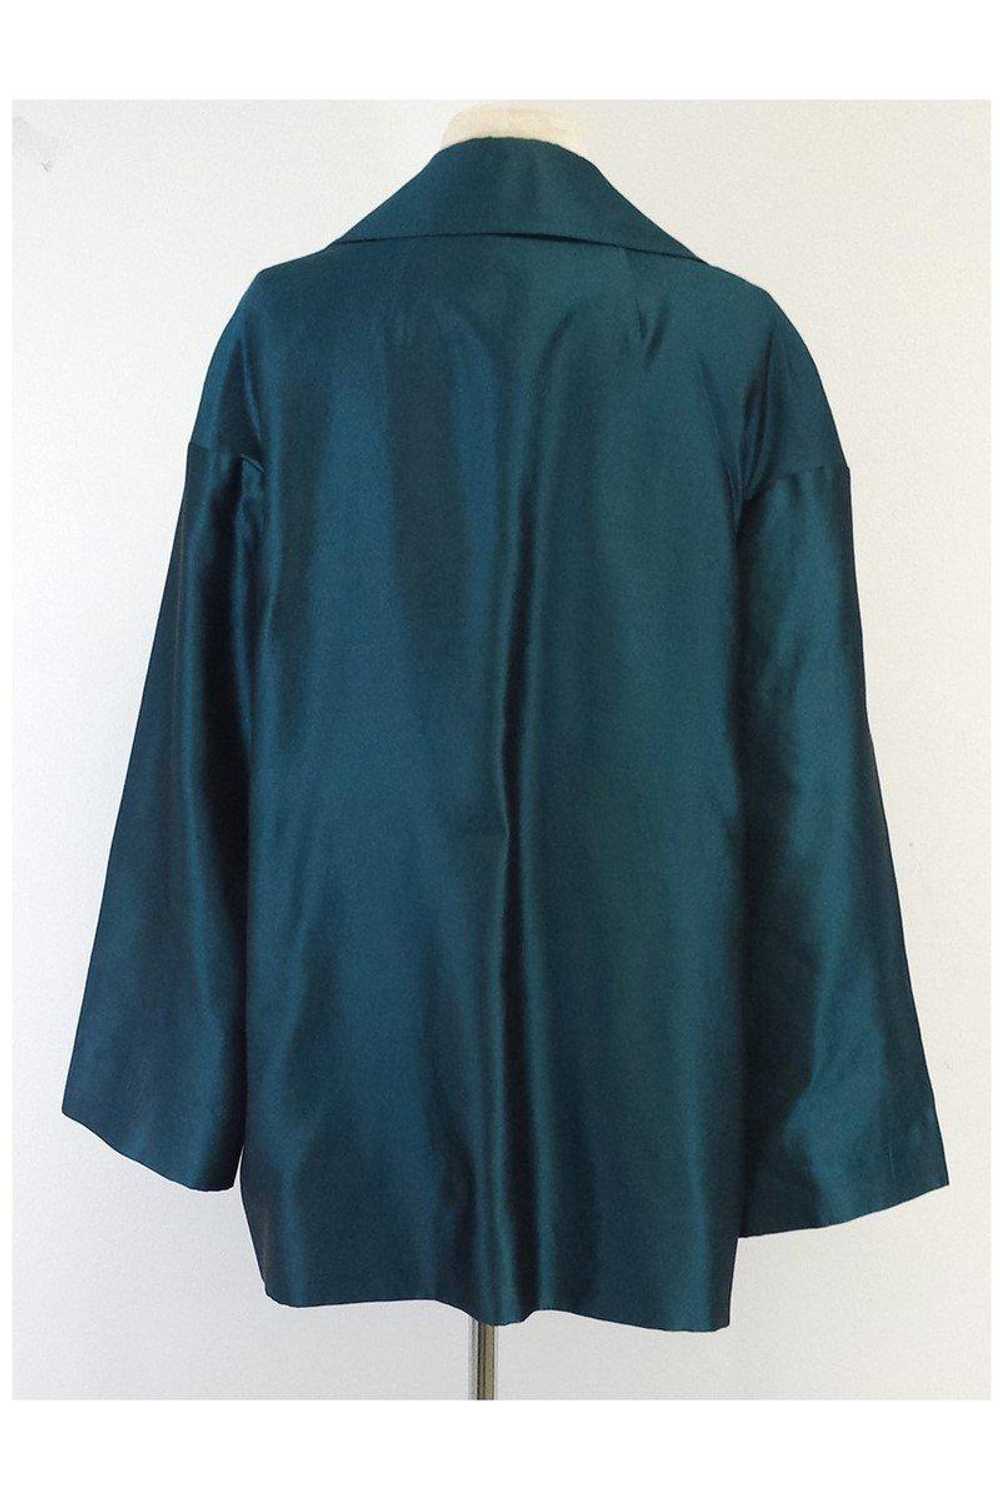 St. John Couture - Teal Silk & Wool Jacket Sz 12 - image 3